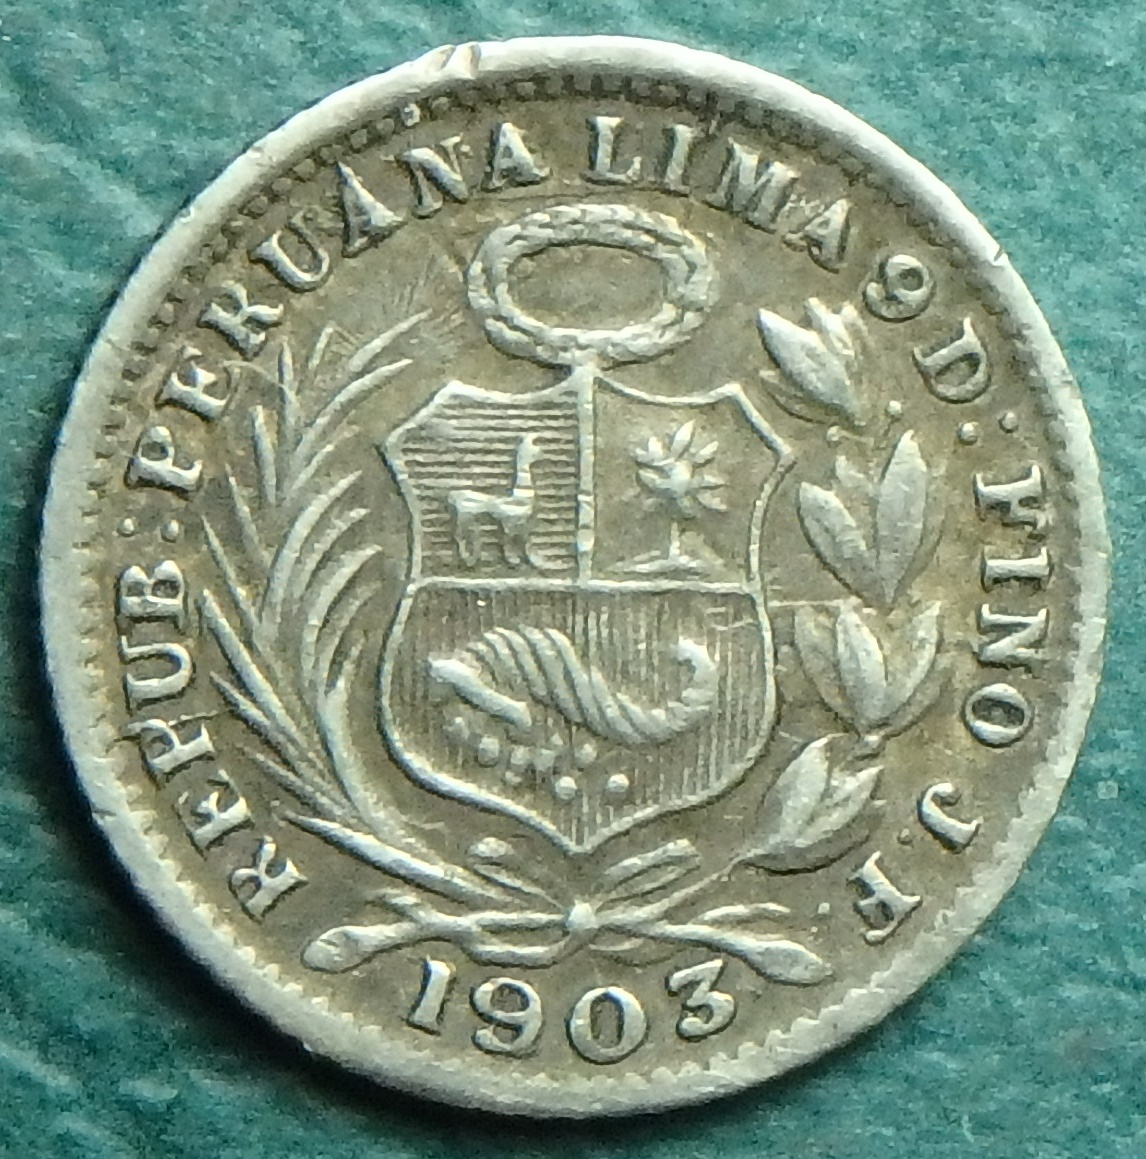 1903 PE 1-2 d rev.JPG